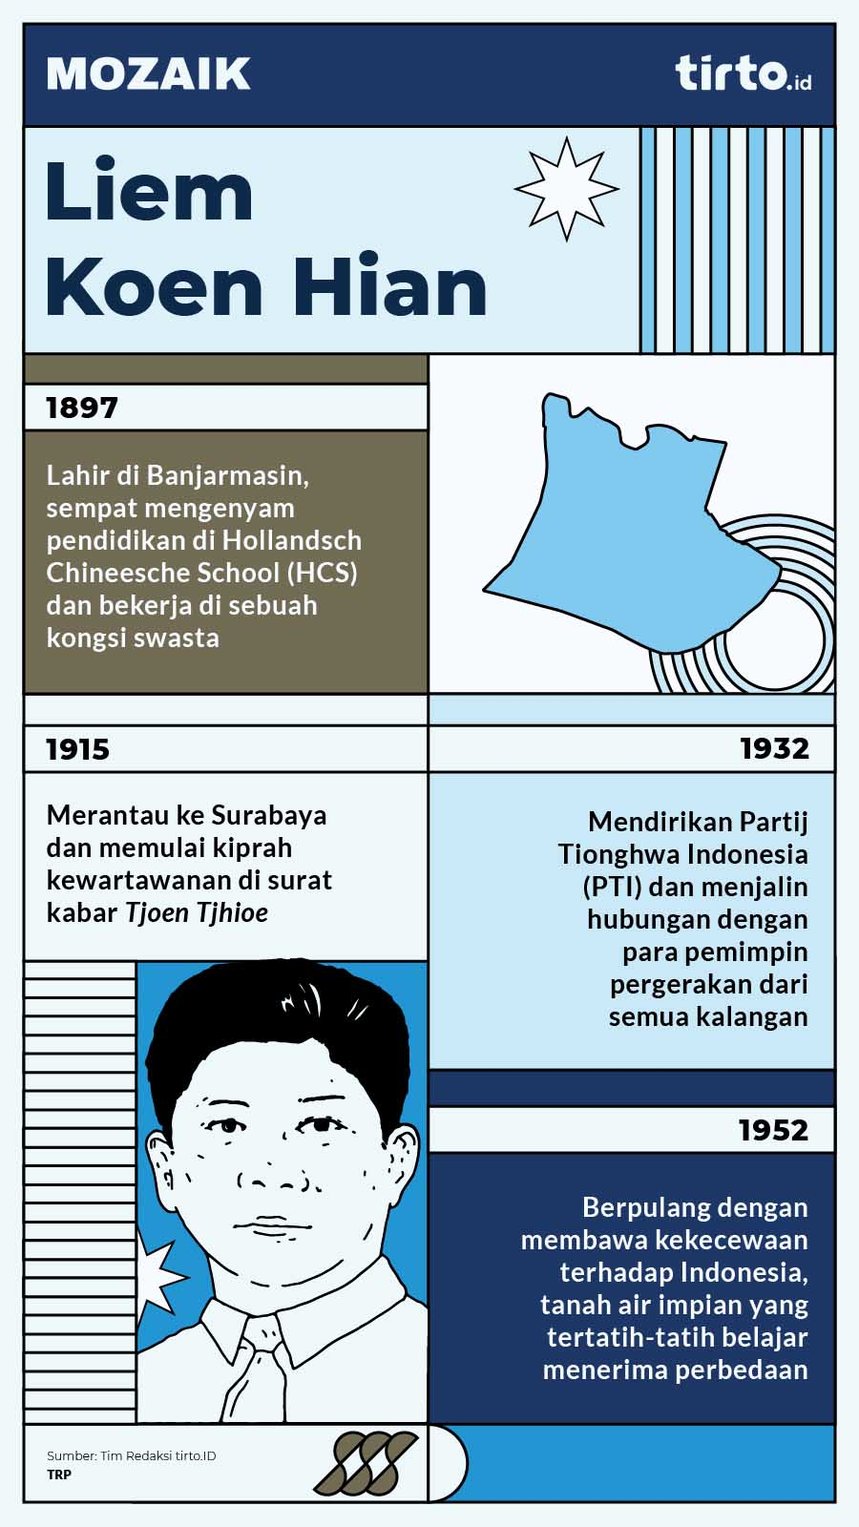 Infografik Mozaik Liem Koen Hian